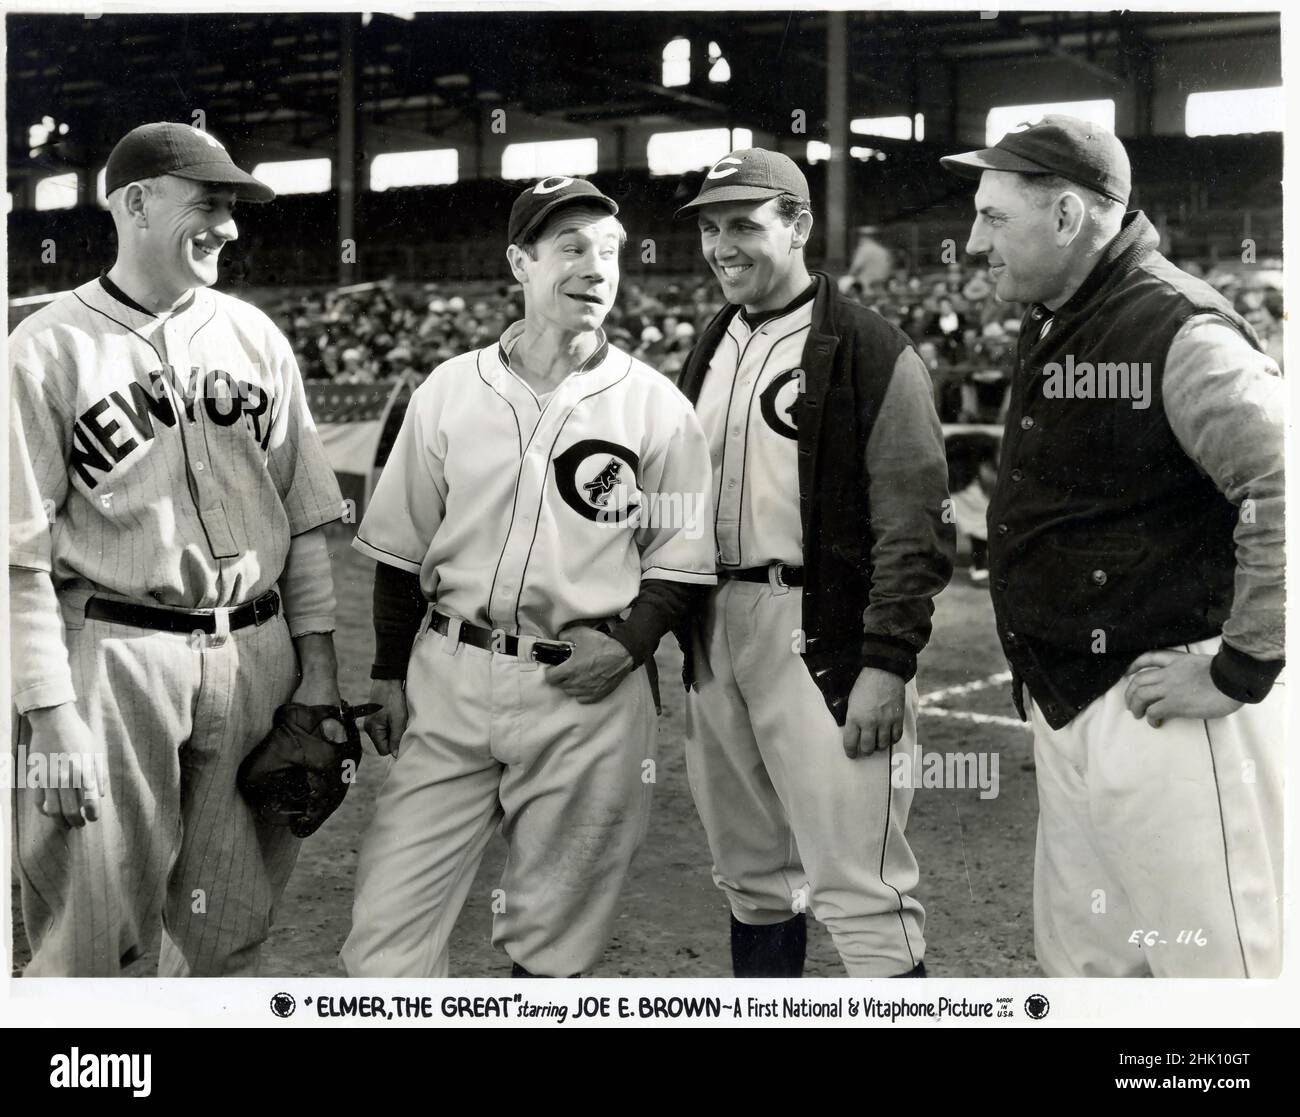 Publicity still aus dem Baseballfilm „Elmer, the Great“ mit Joe E. Brown. Stockfoto